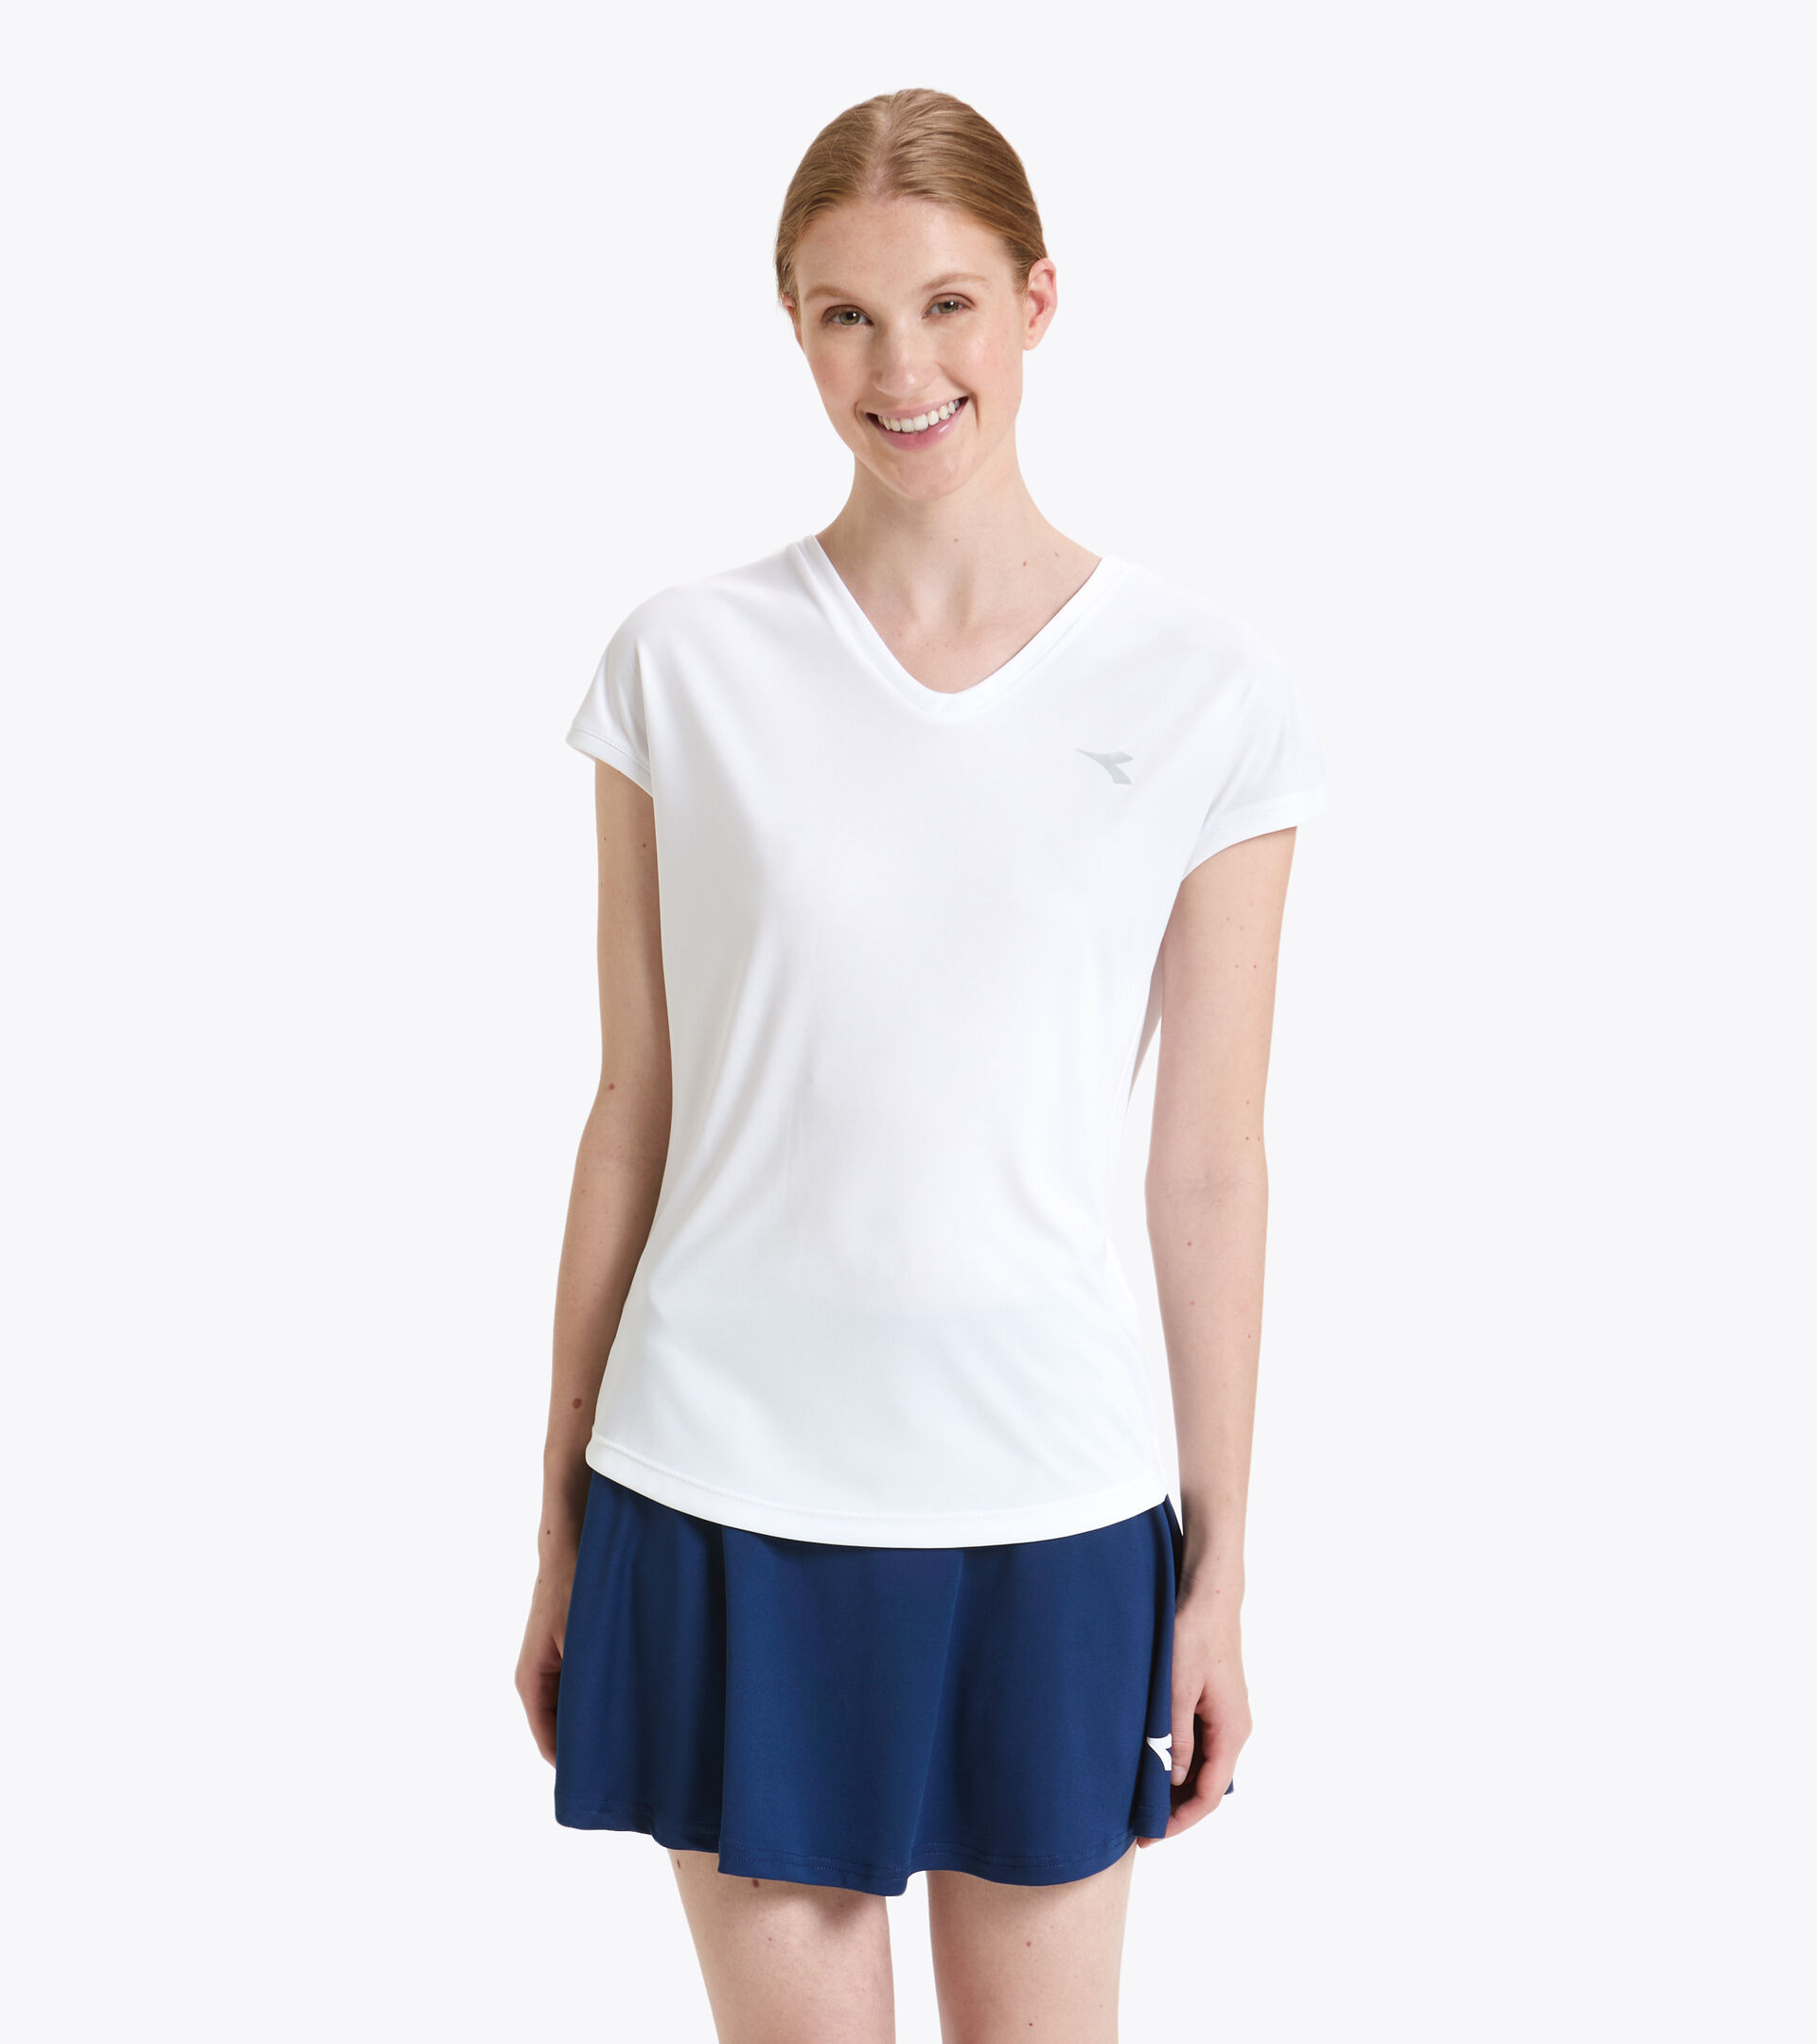 Camiseta de tenis - Mujer L. T-SHIRT TEAM BLANCO VIVO - Diadora